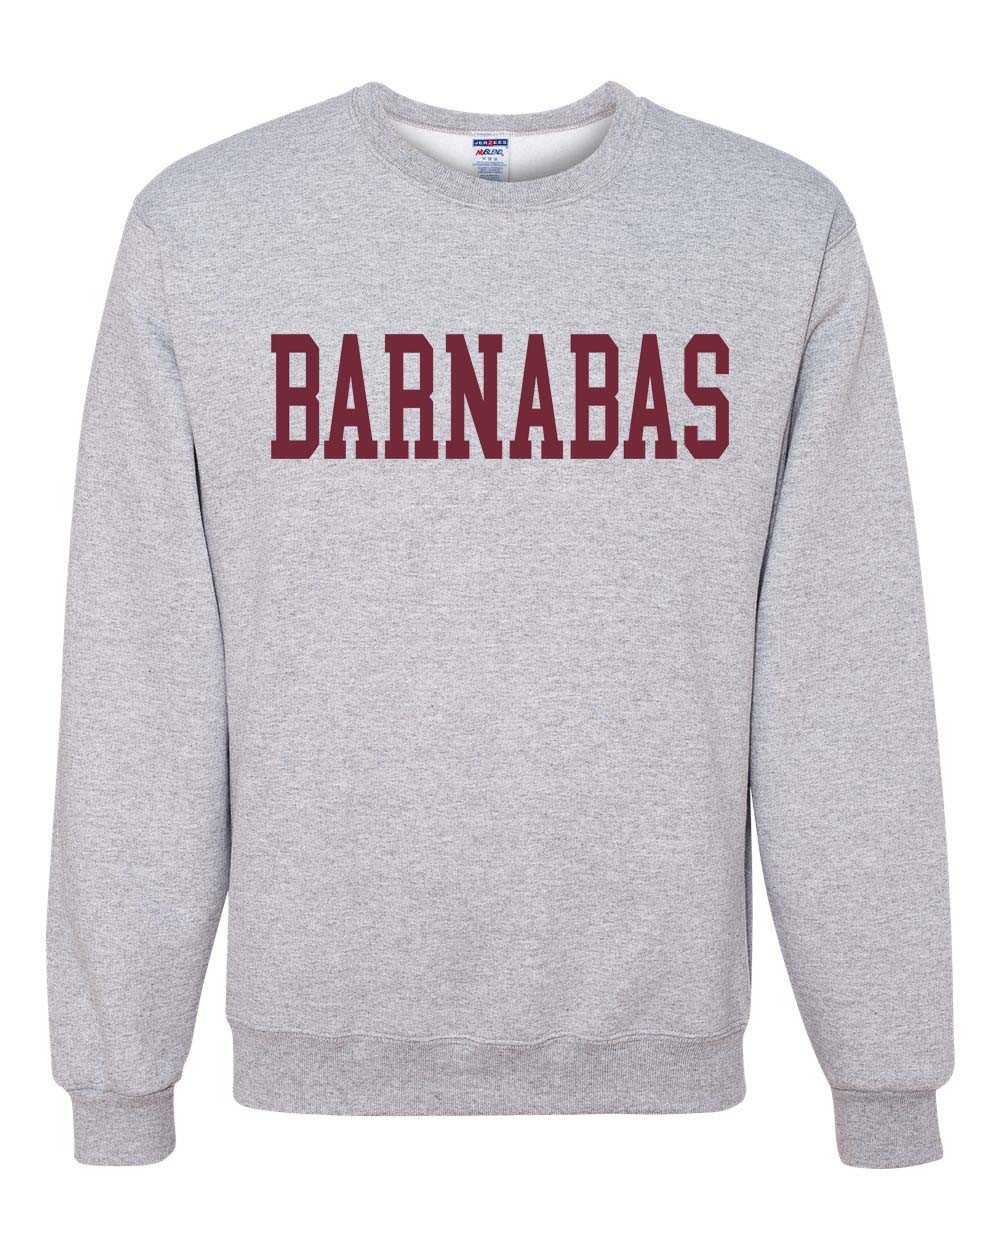 SBS Spirit Sweatshirt w/ Barnabas Logo - Please allow 2-3 Weeks for Delivery